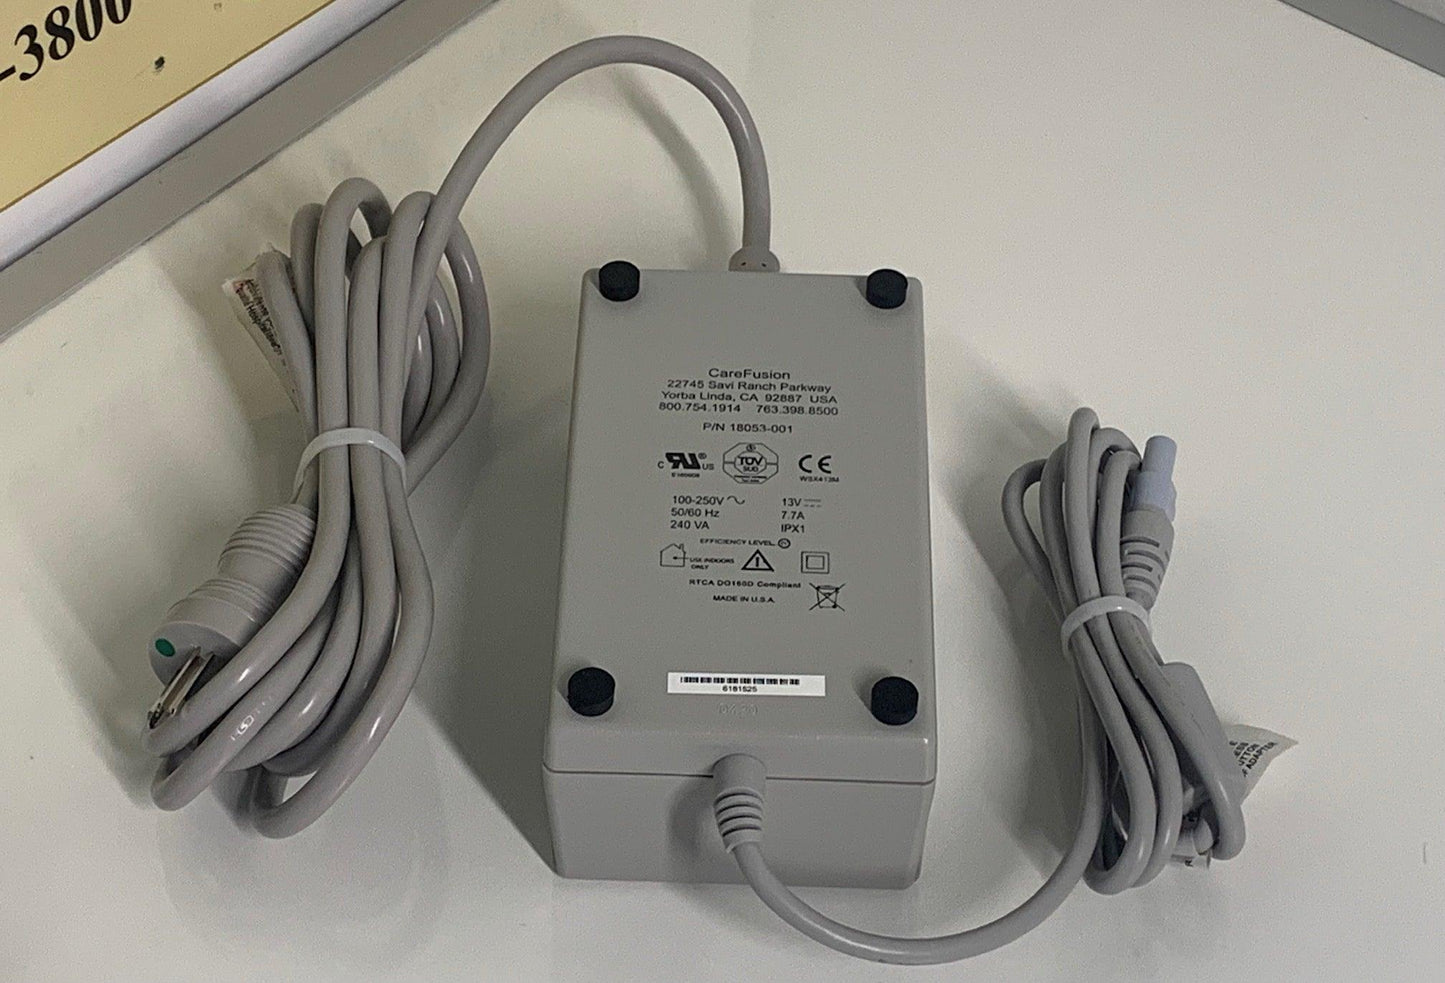 USED CareFusion Viasys LTV 1200 Medical Ventilator 18888-001 with Warranty